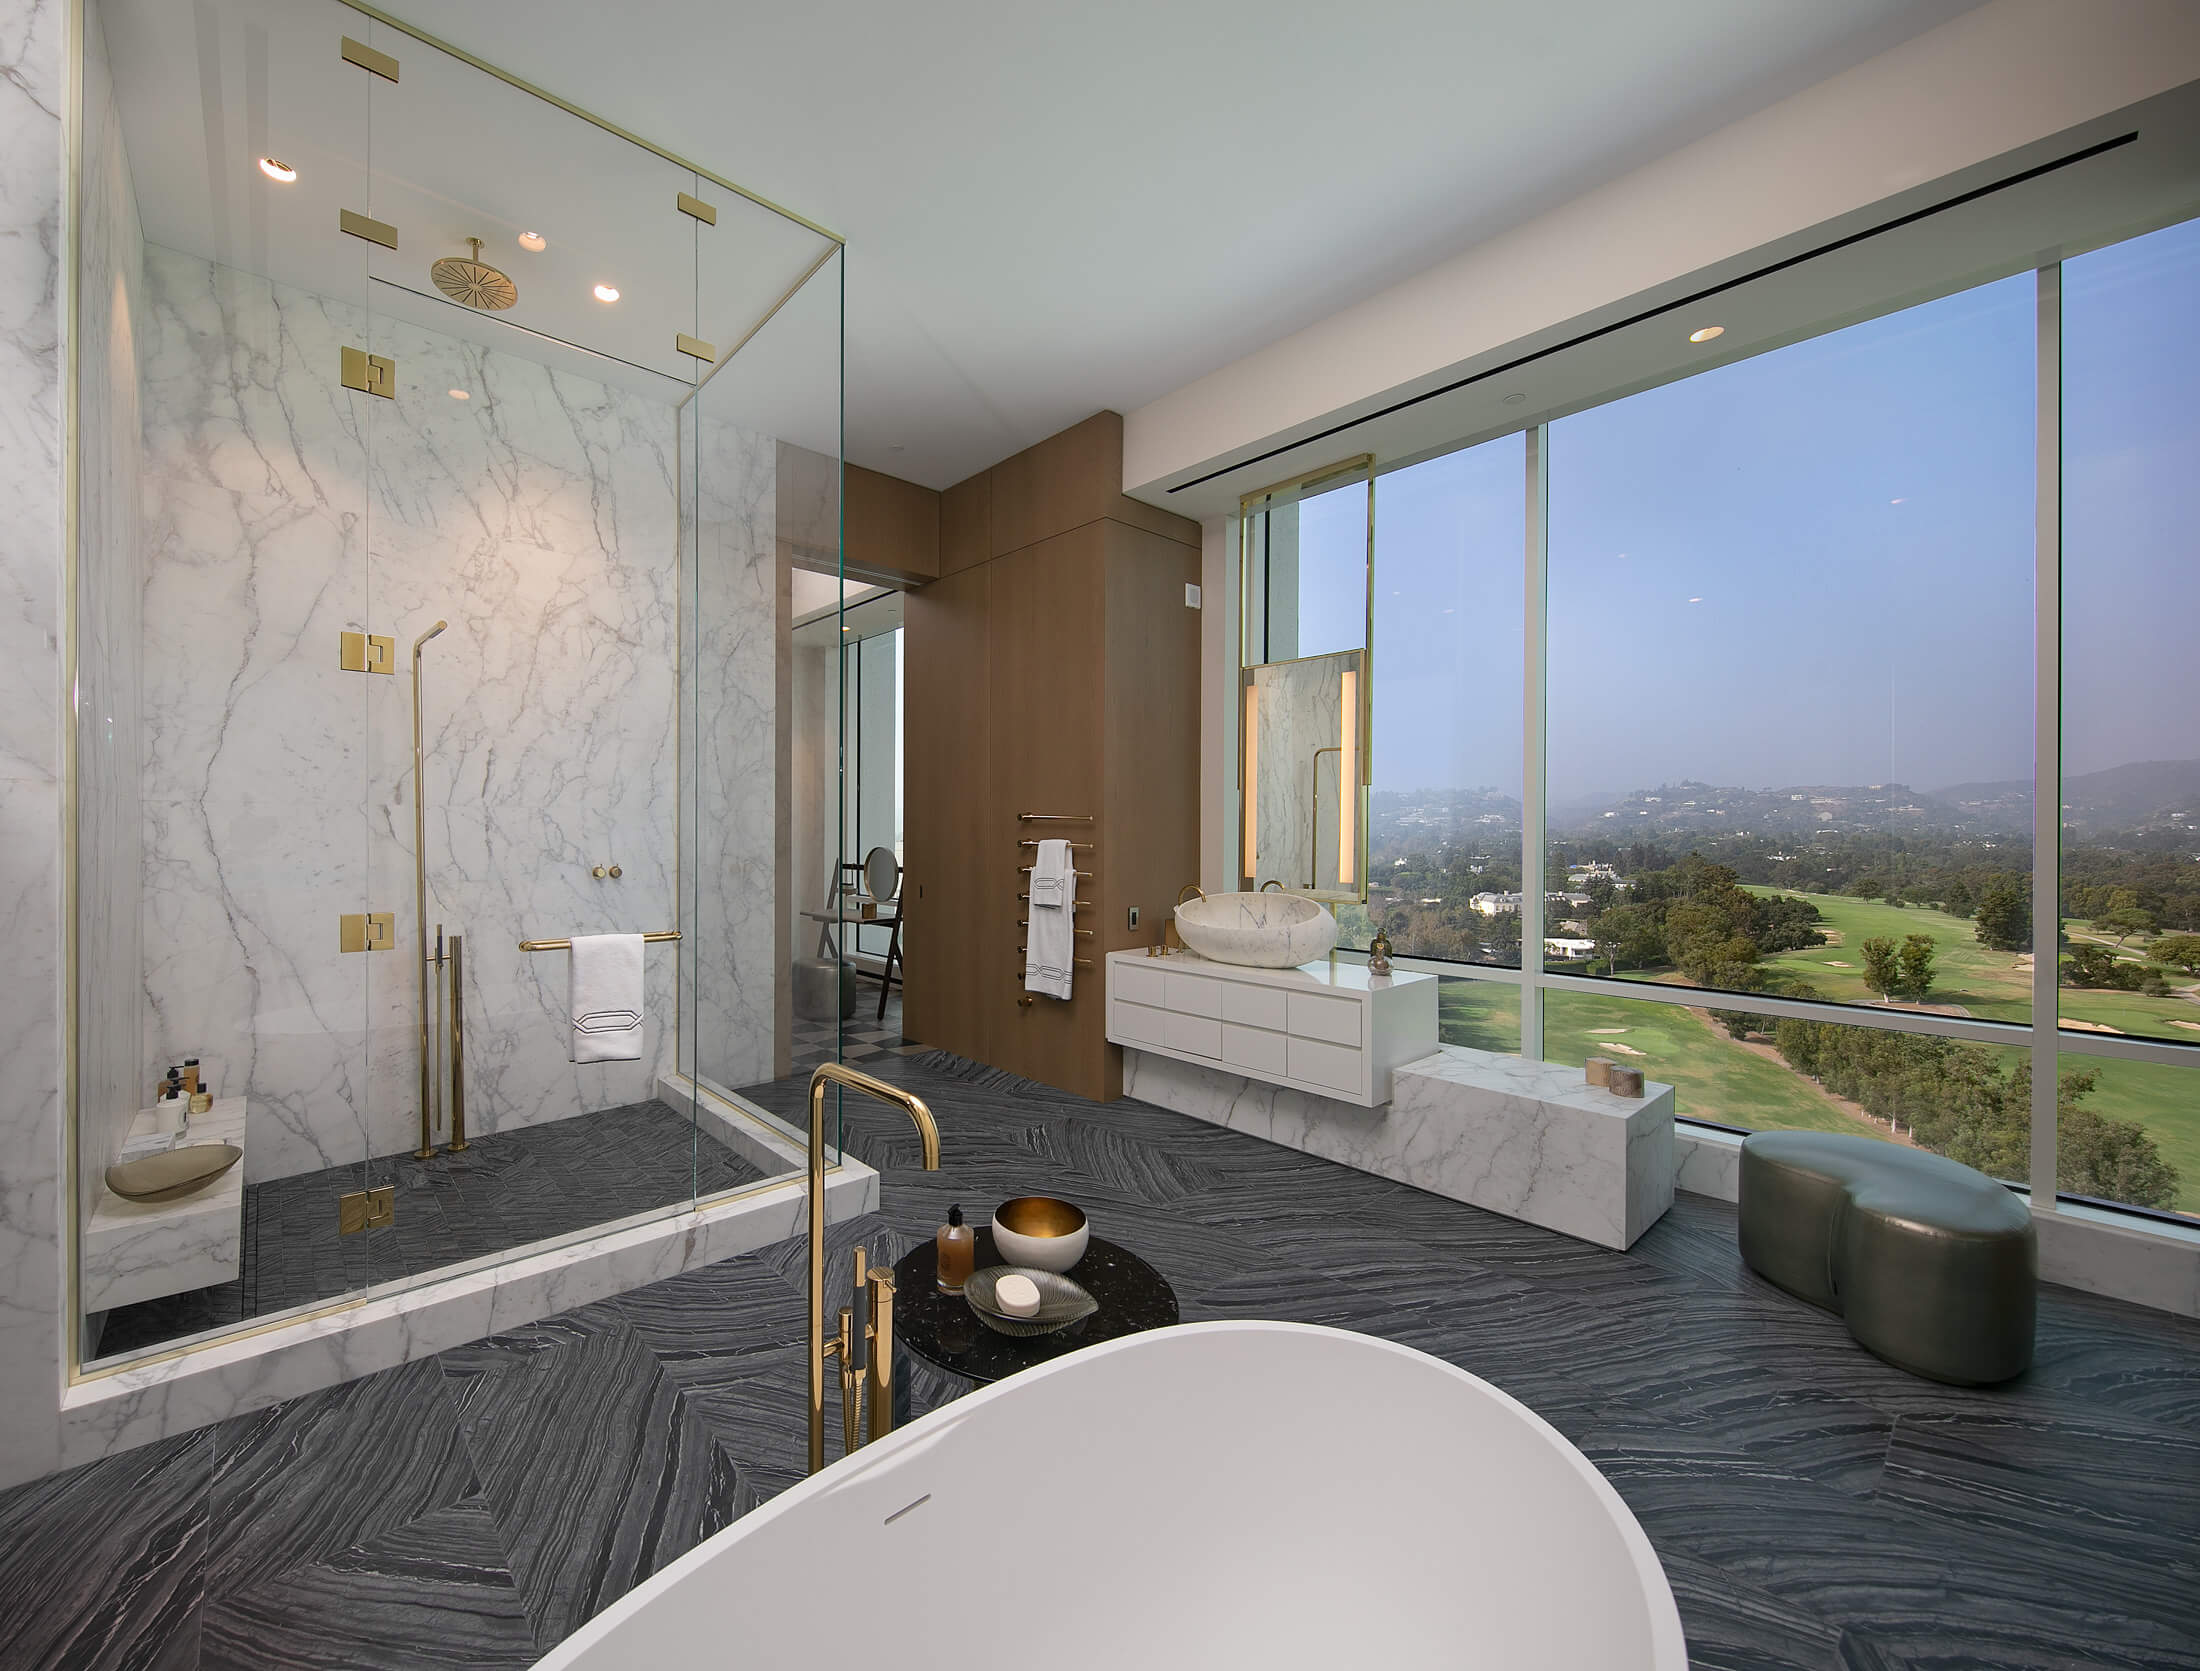 VOLA bathroom fixtures in luxury apartment